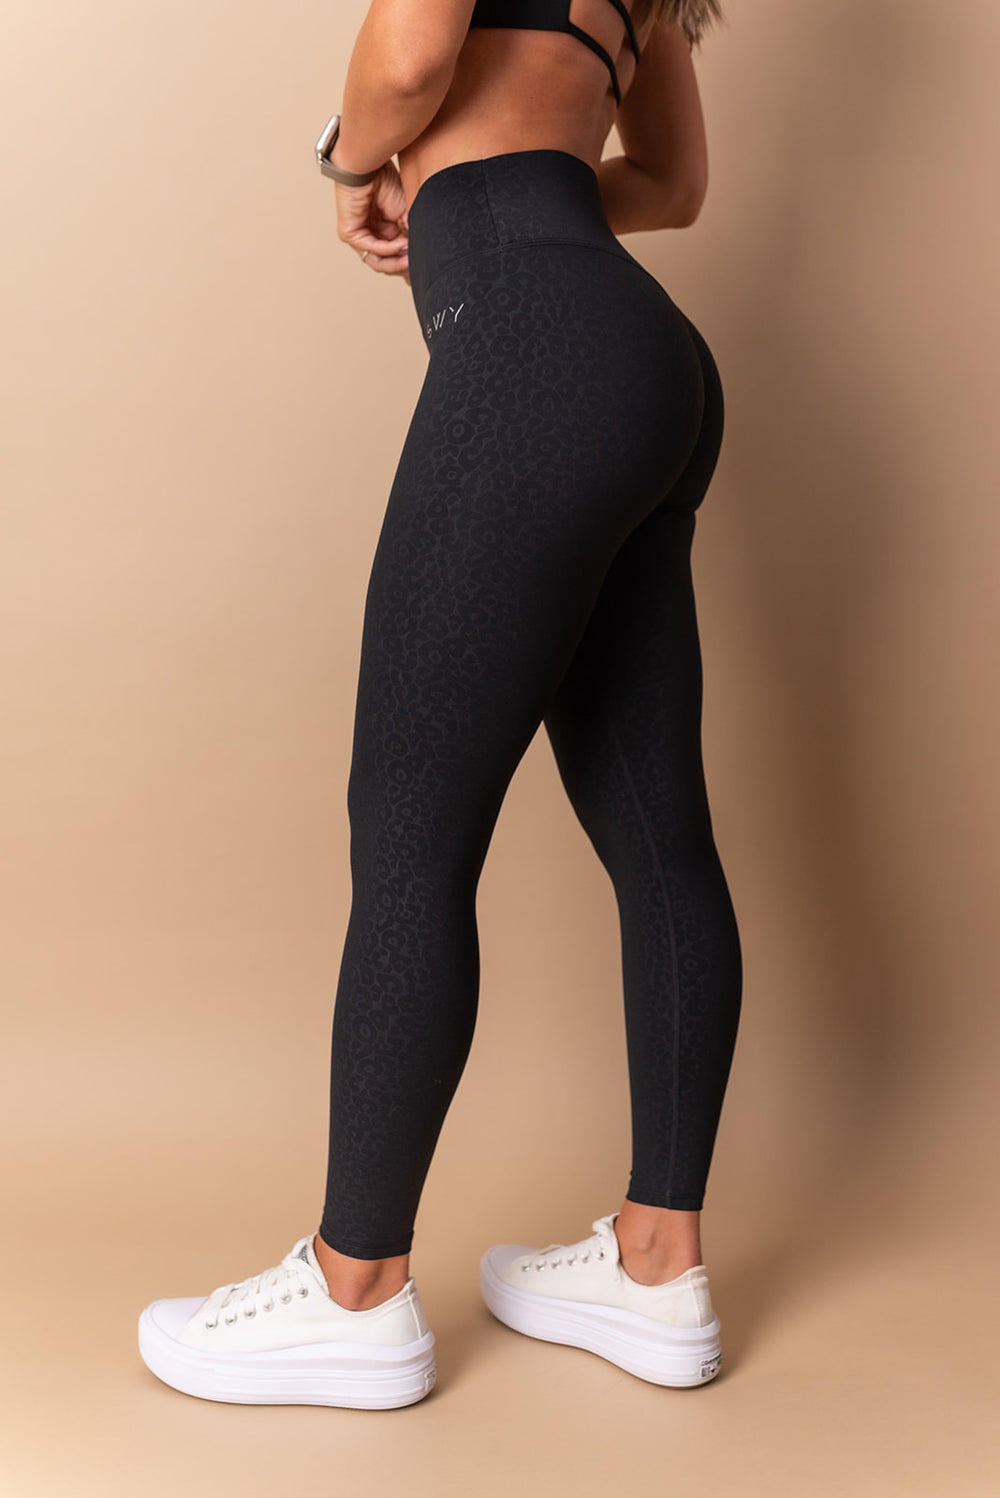 Softline leggings con scrunch – SWY Brand